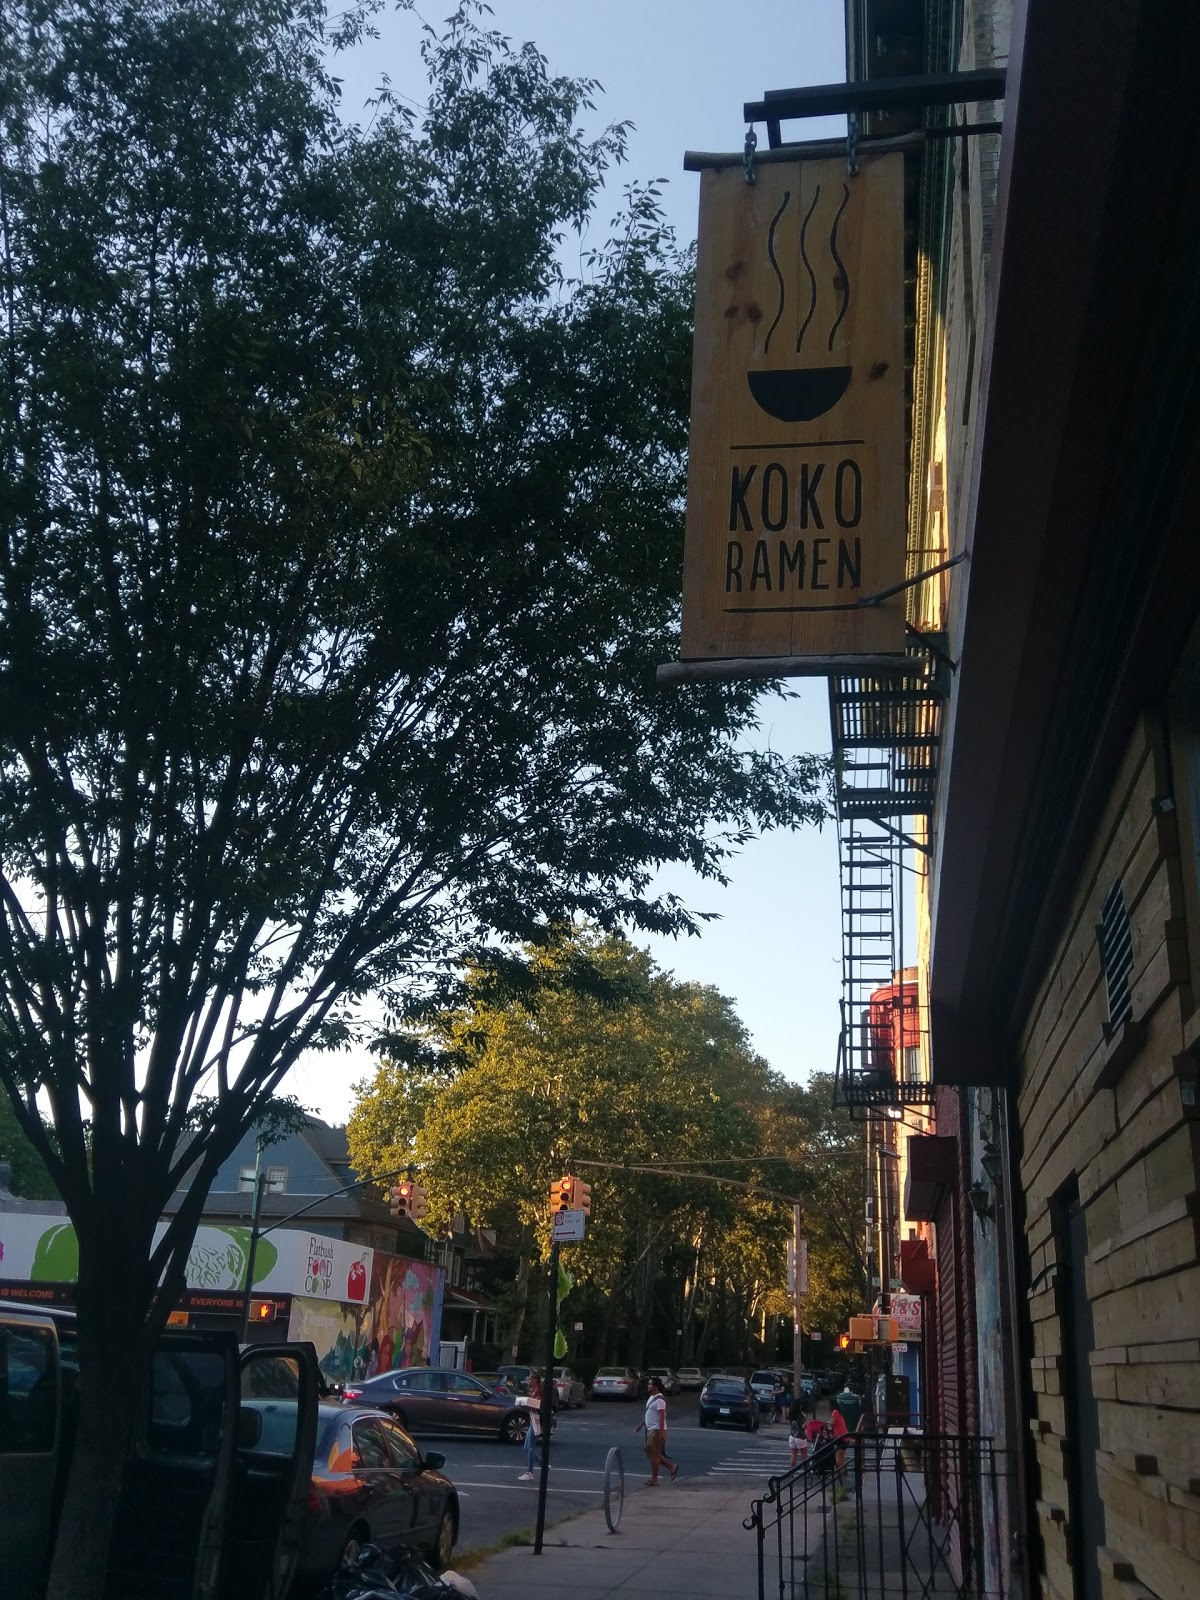 Photo of Koko Ramen in New York City, New York, United States - 2 Picture of Restaurant, Food, Point of interest, Establishment